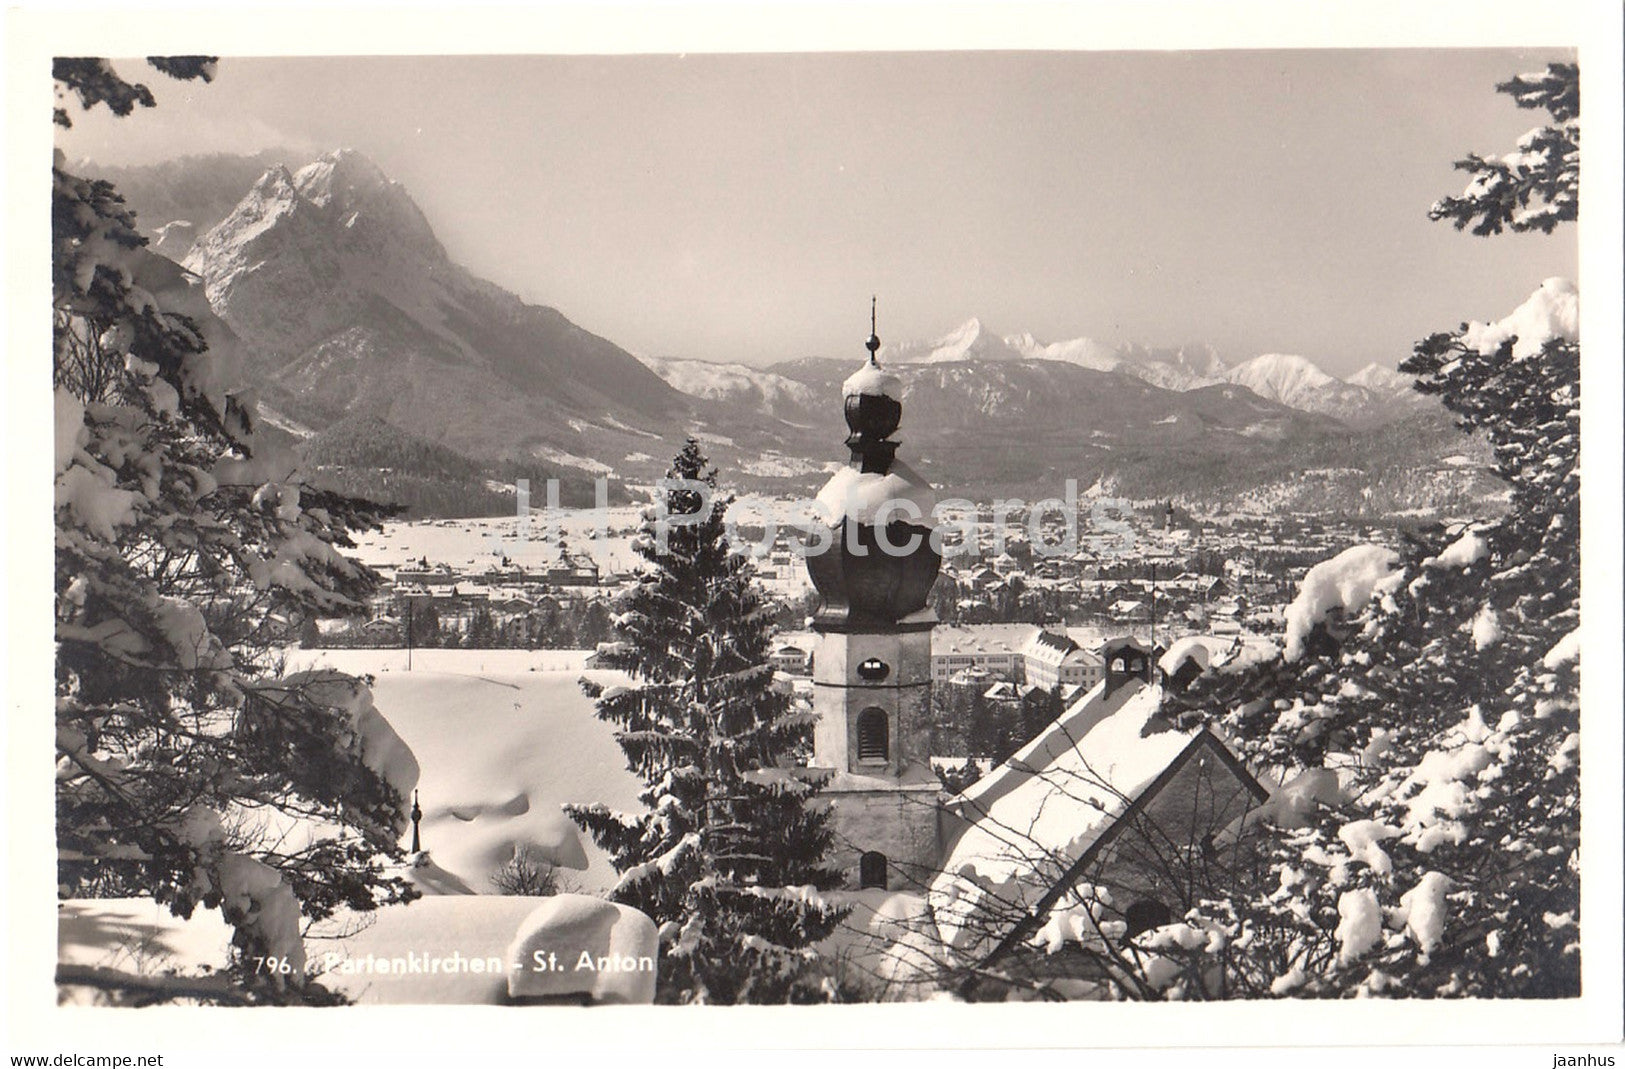 Partenkirchen  - St Anton - Germany - unused - JH Postcards